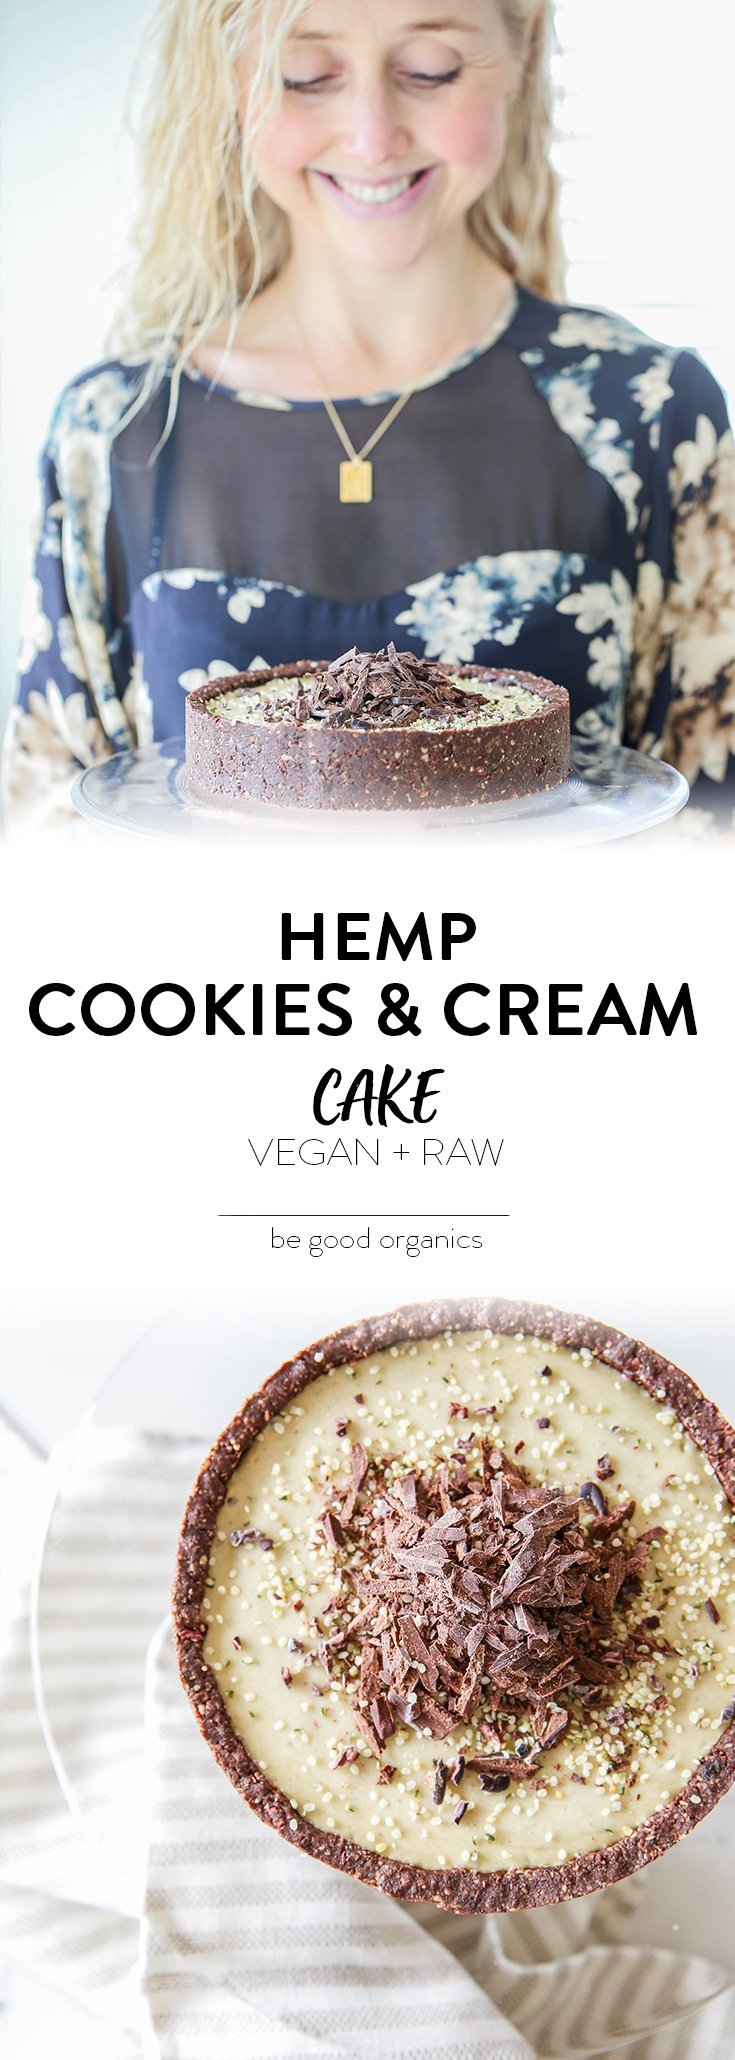 Hemp Cookies and Cream Cake by Buffy Ellen